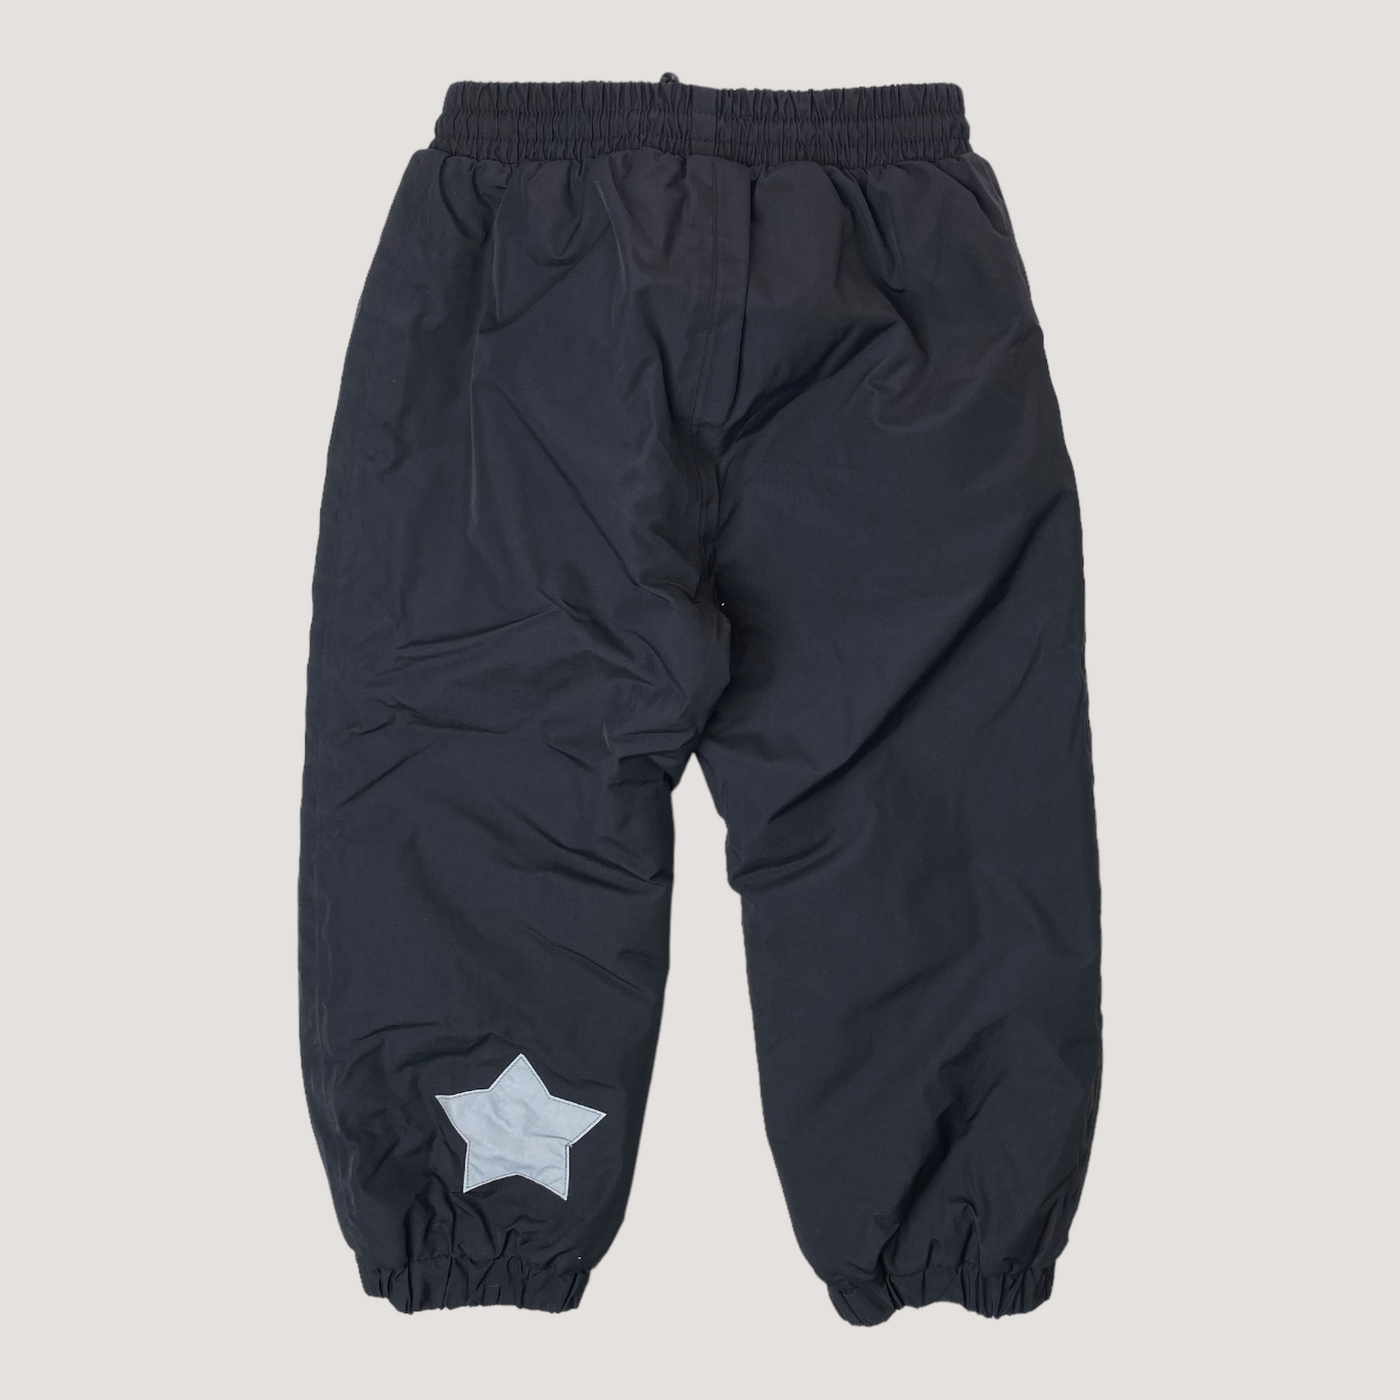 Molo heat basic winter pants, black | 104cm